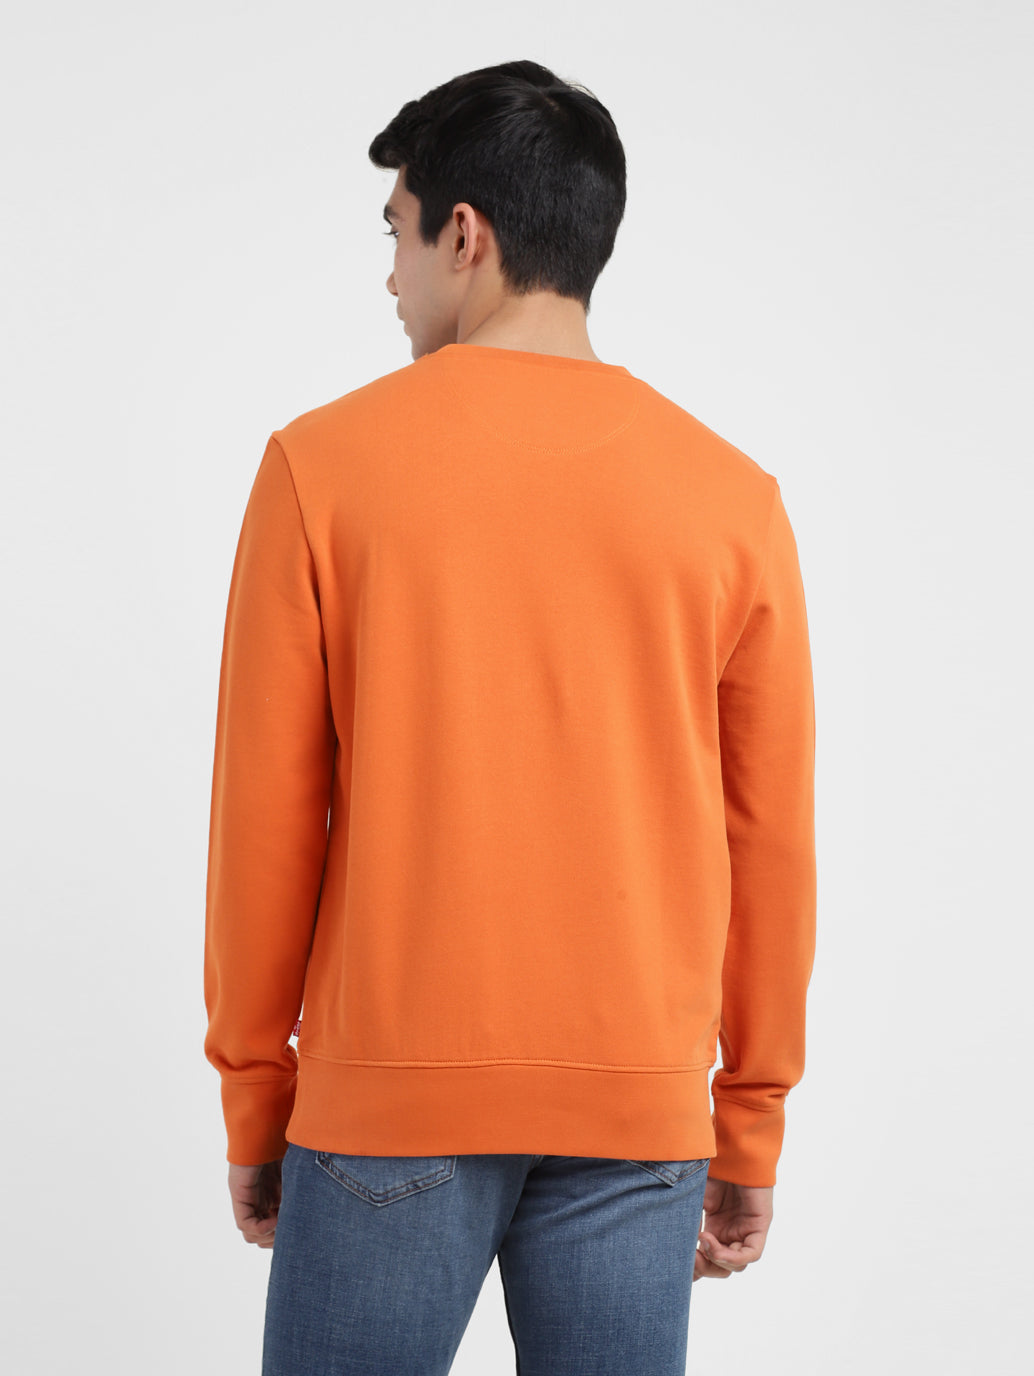 Men's Typography Crew Neck Sweatshirt Orange